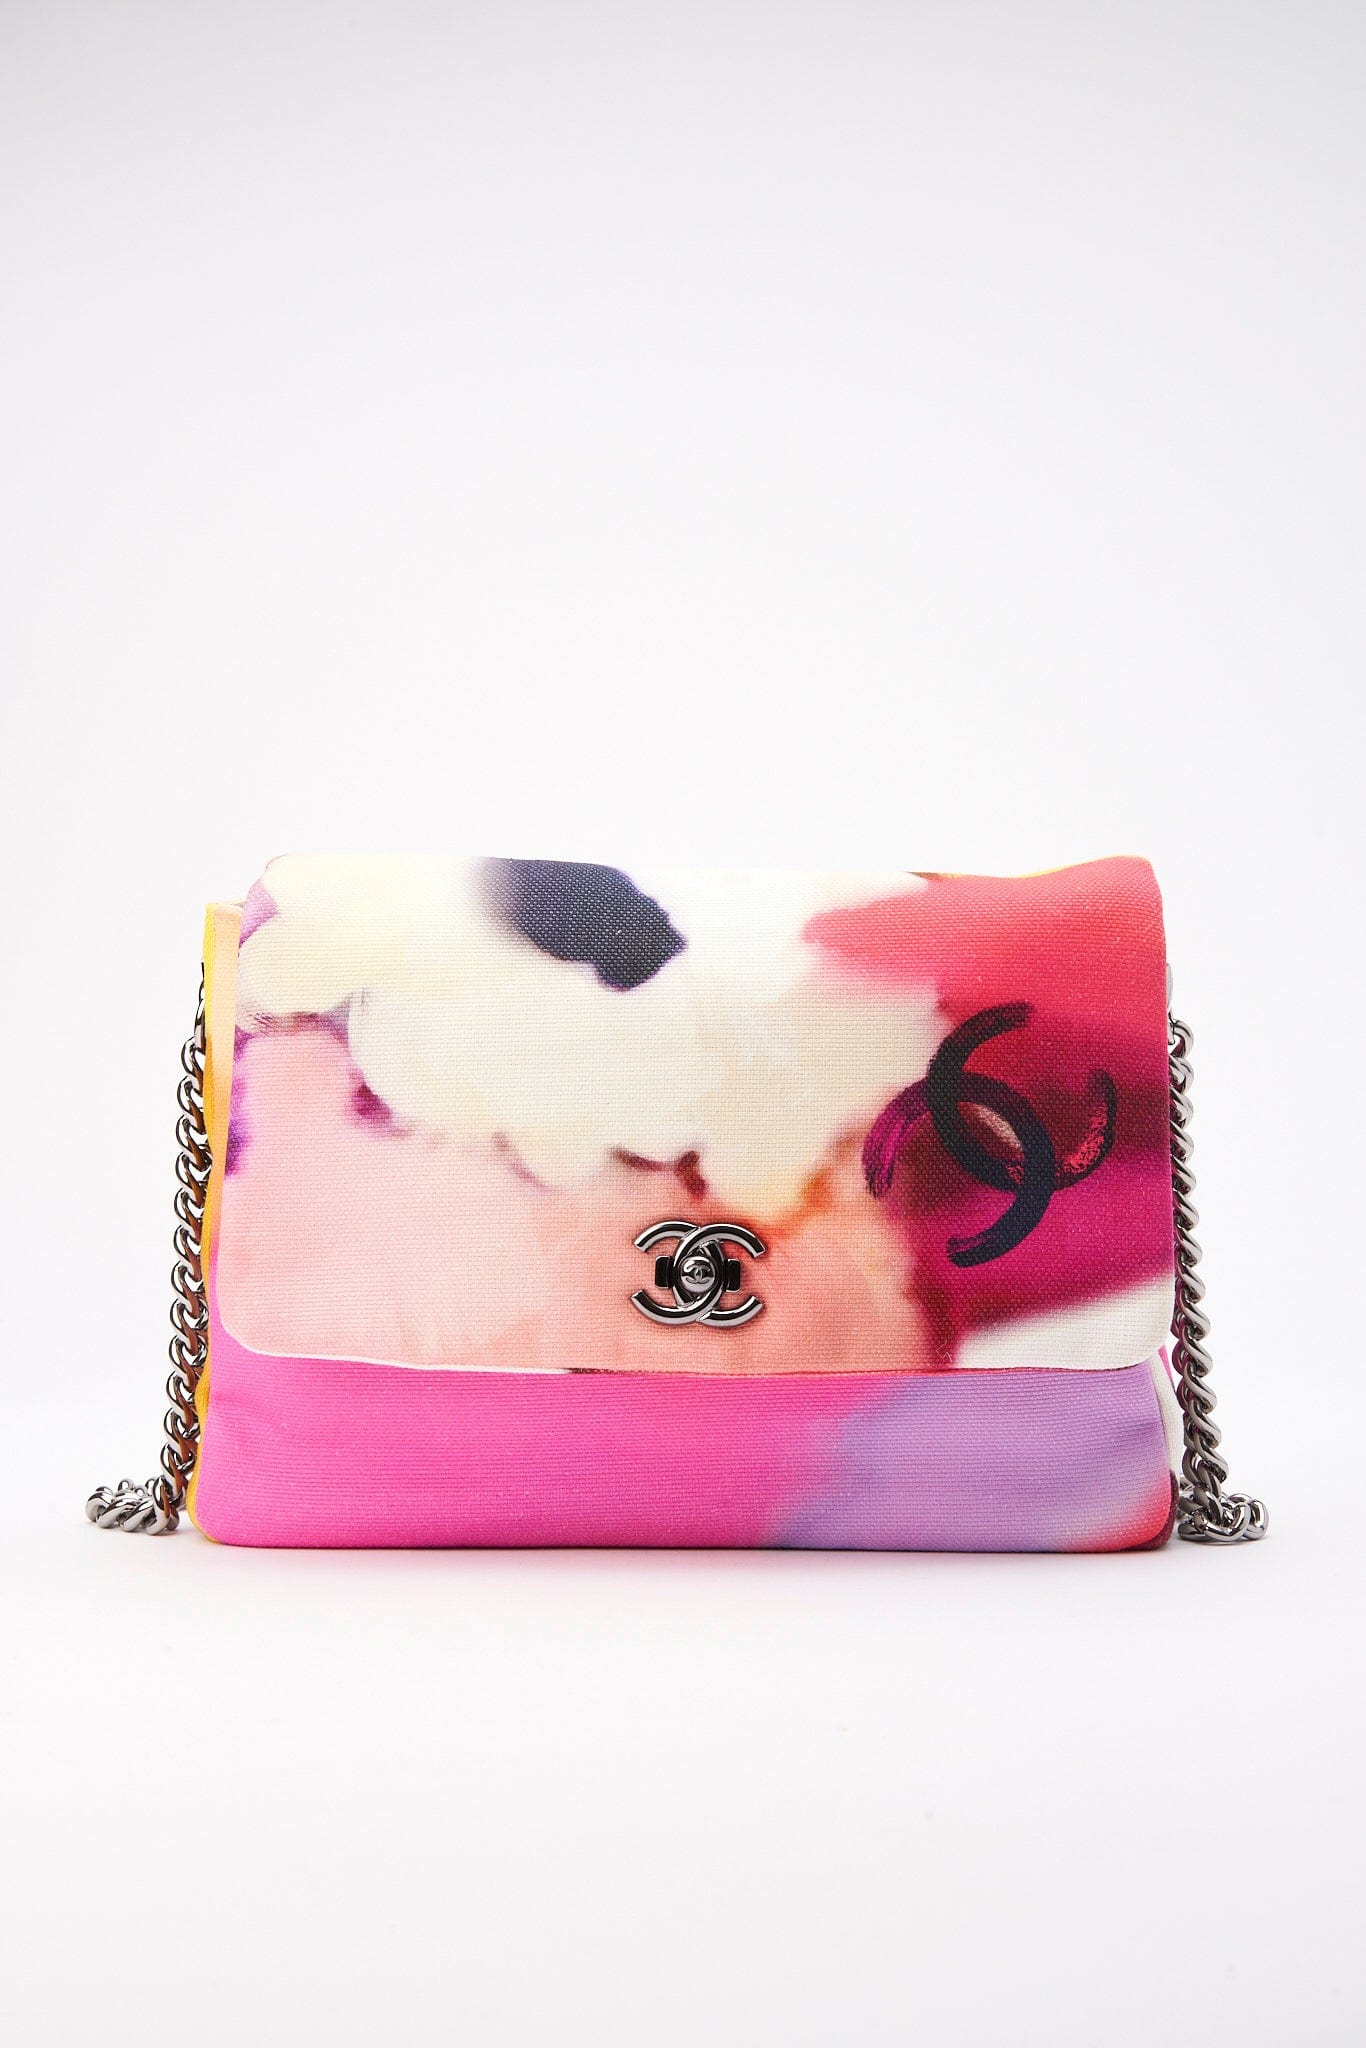 2015 Chanel Floral Watercolour Flap Bag - Never Worn